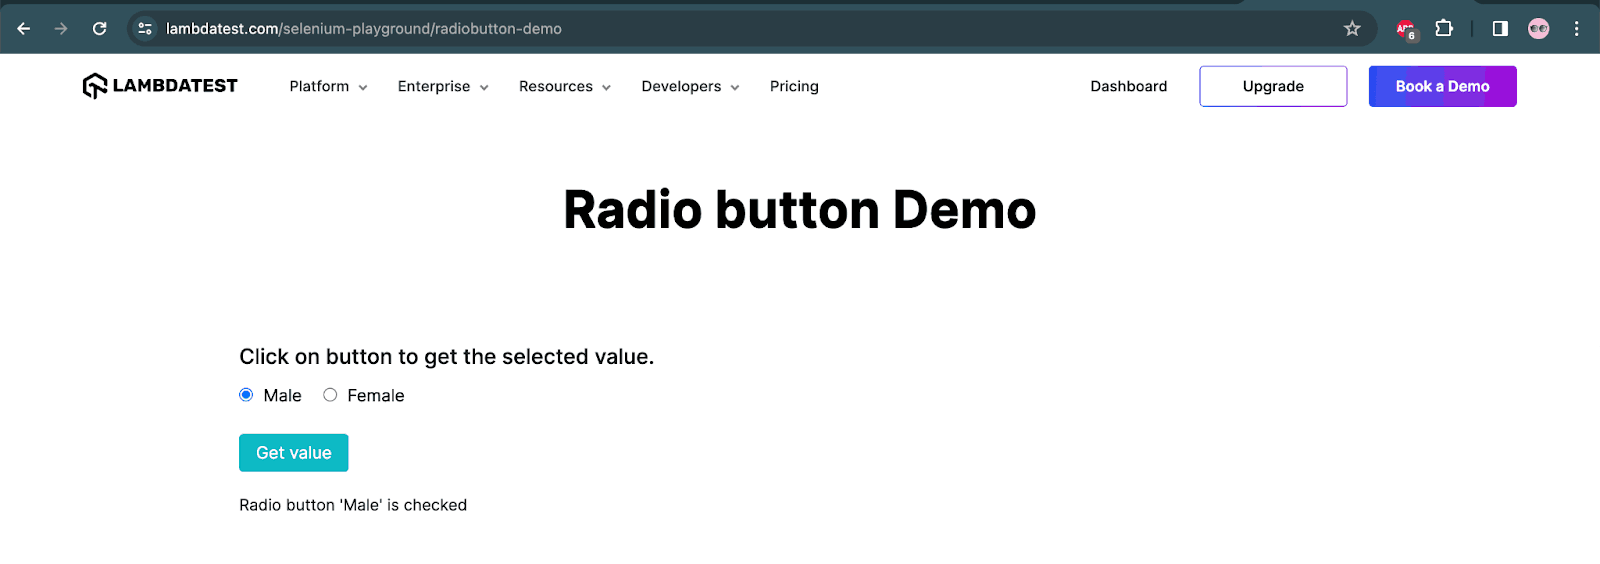 Radio button Demo page